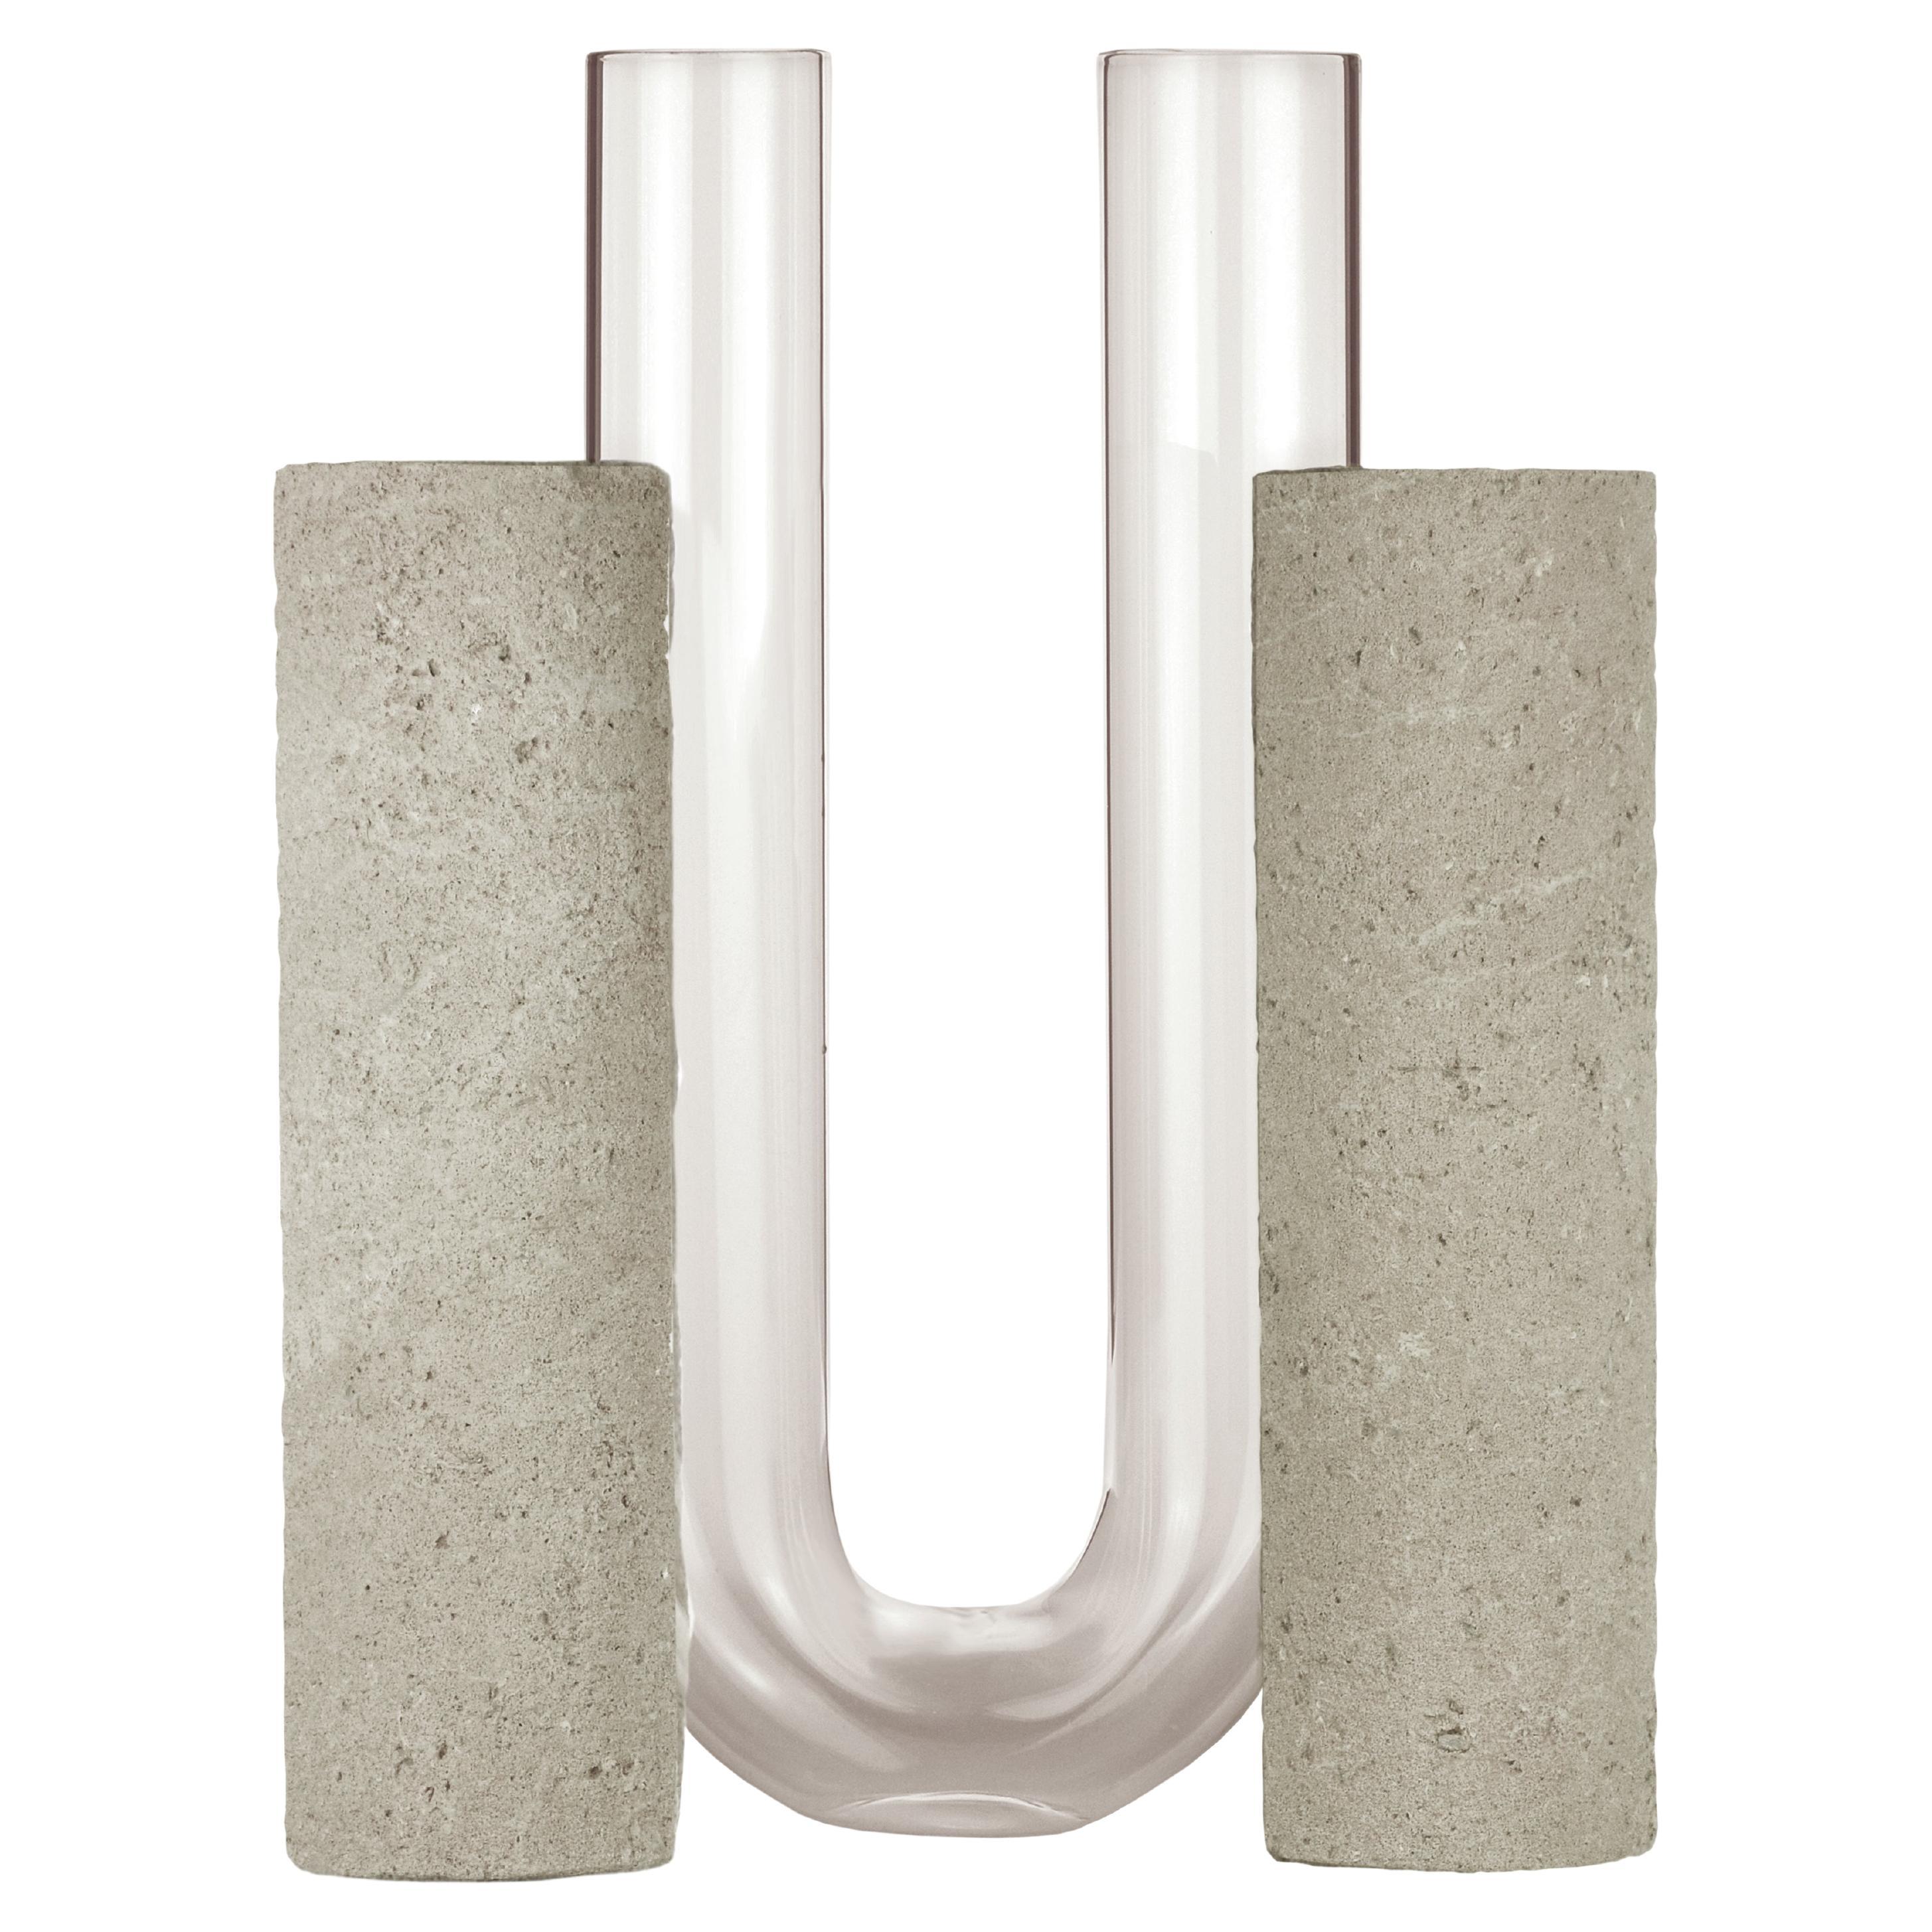 Vase aus grauem, geräuchertem Kupfer dello Sviluppo Soils von Coki Barbieri